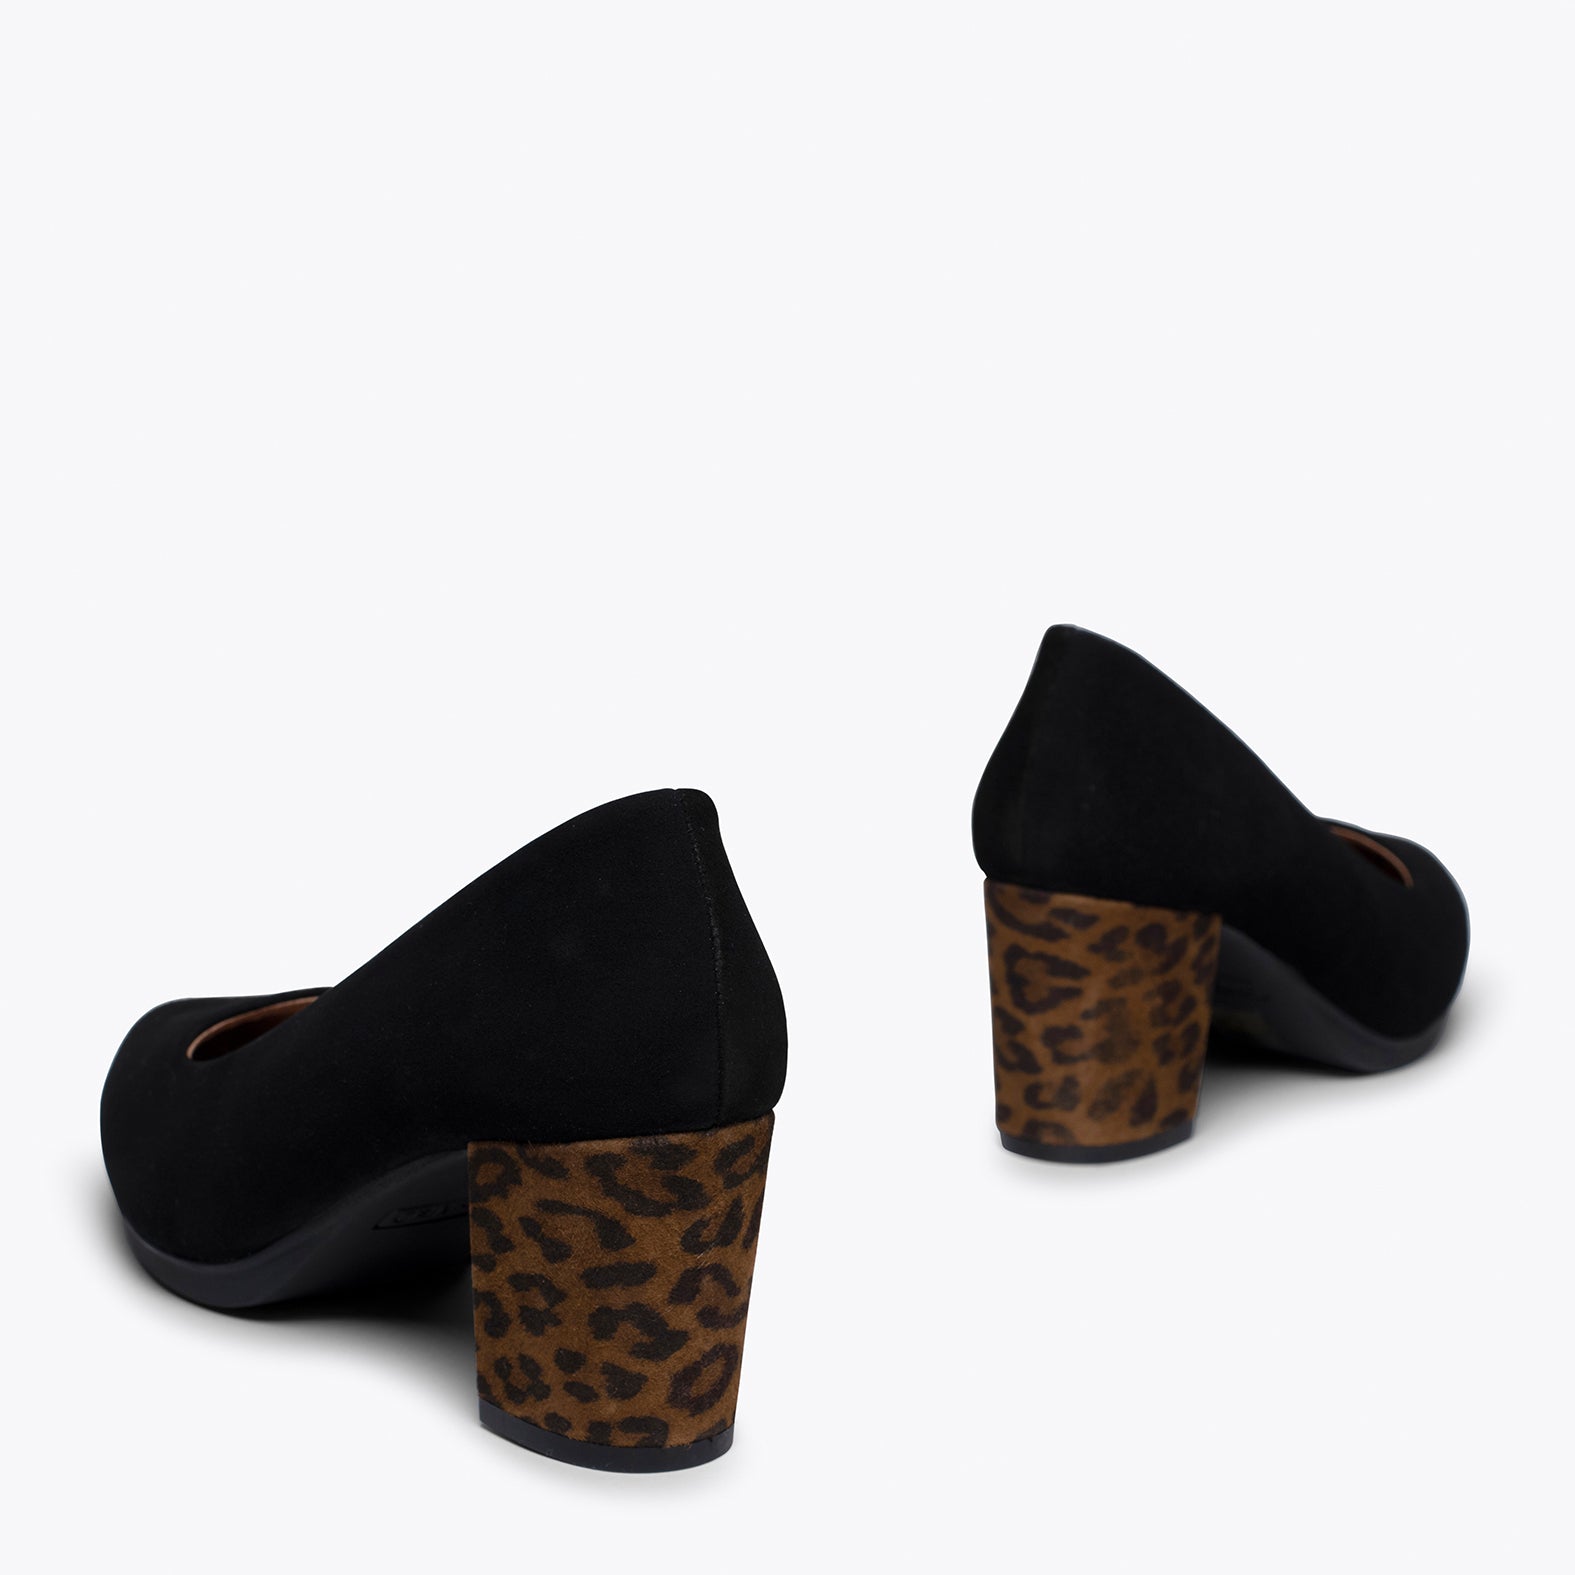 URBAN ANIMAL - Zapato NEGRO con tacón medio leopardo